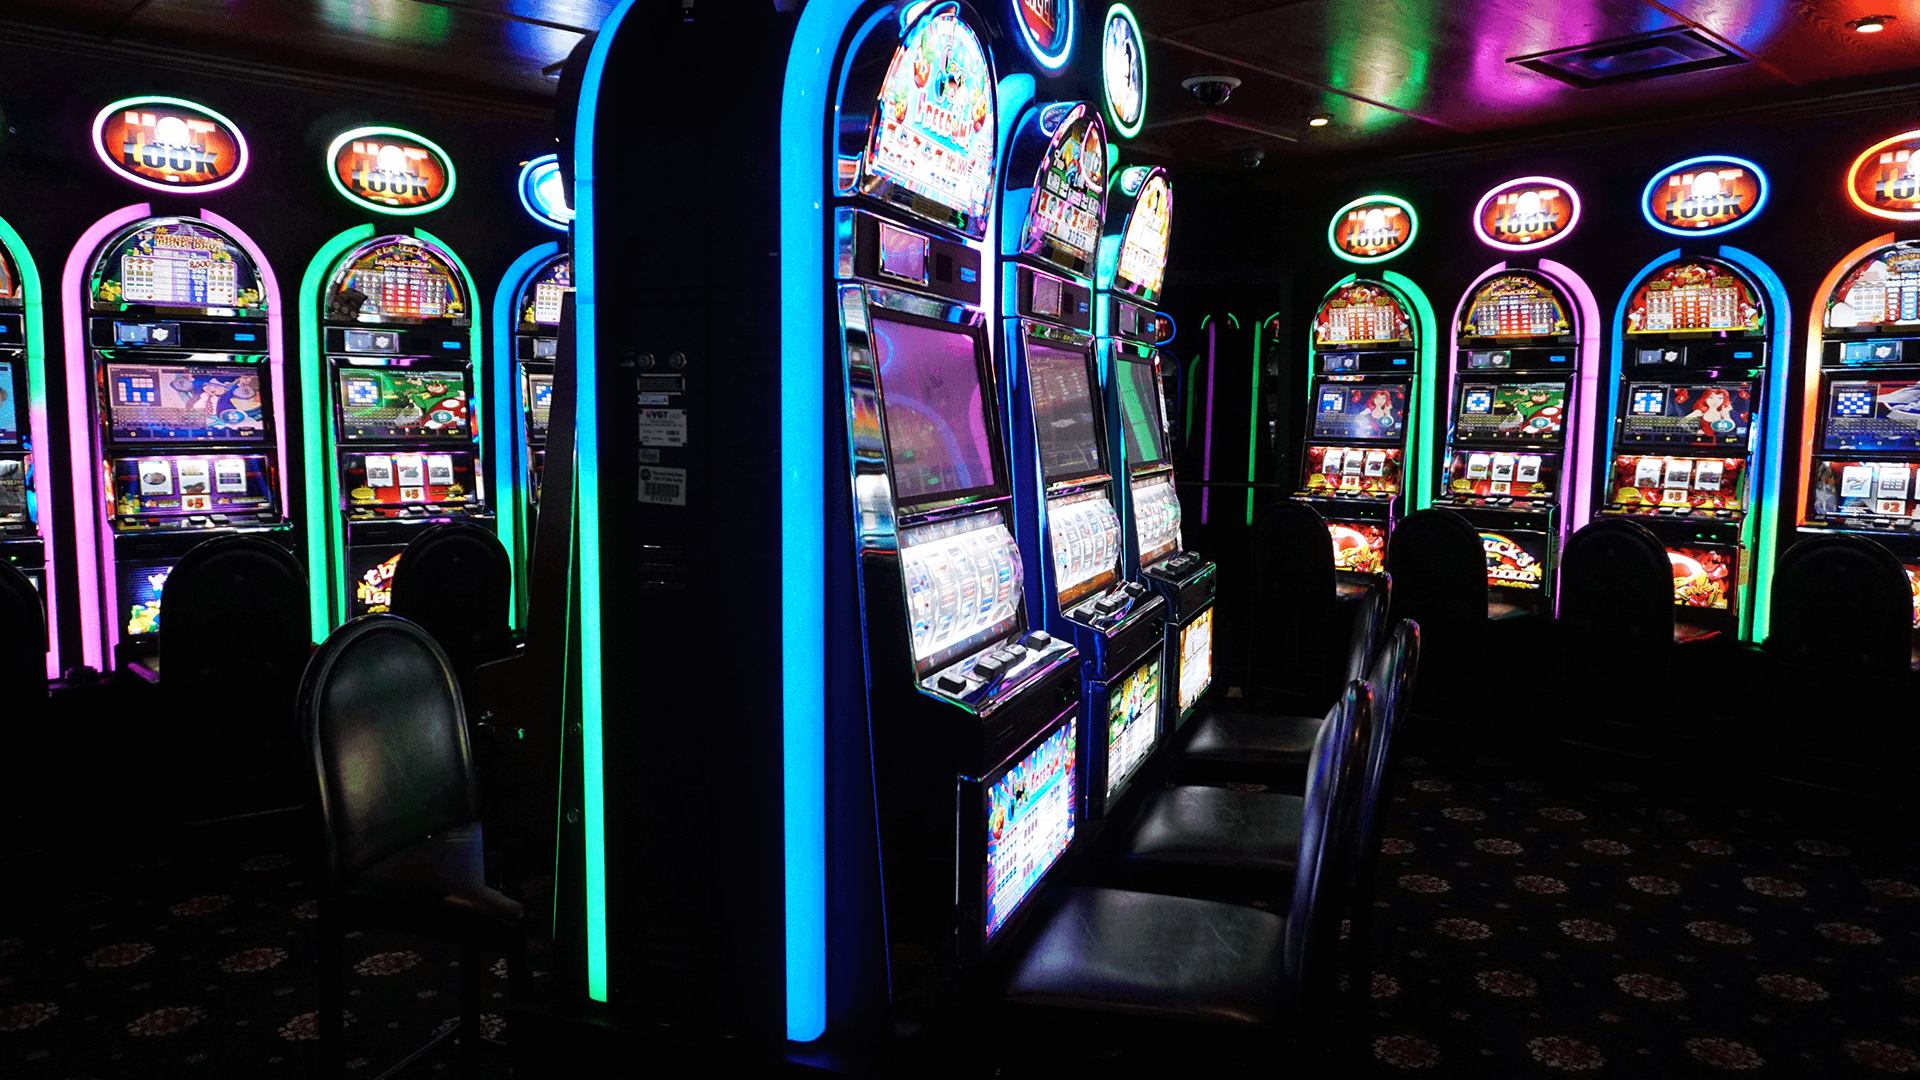 Mansion casino